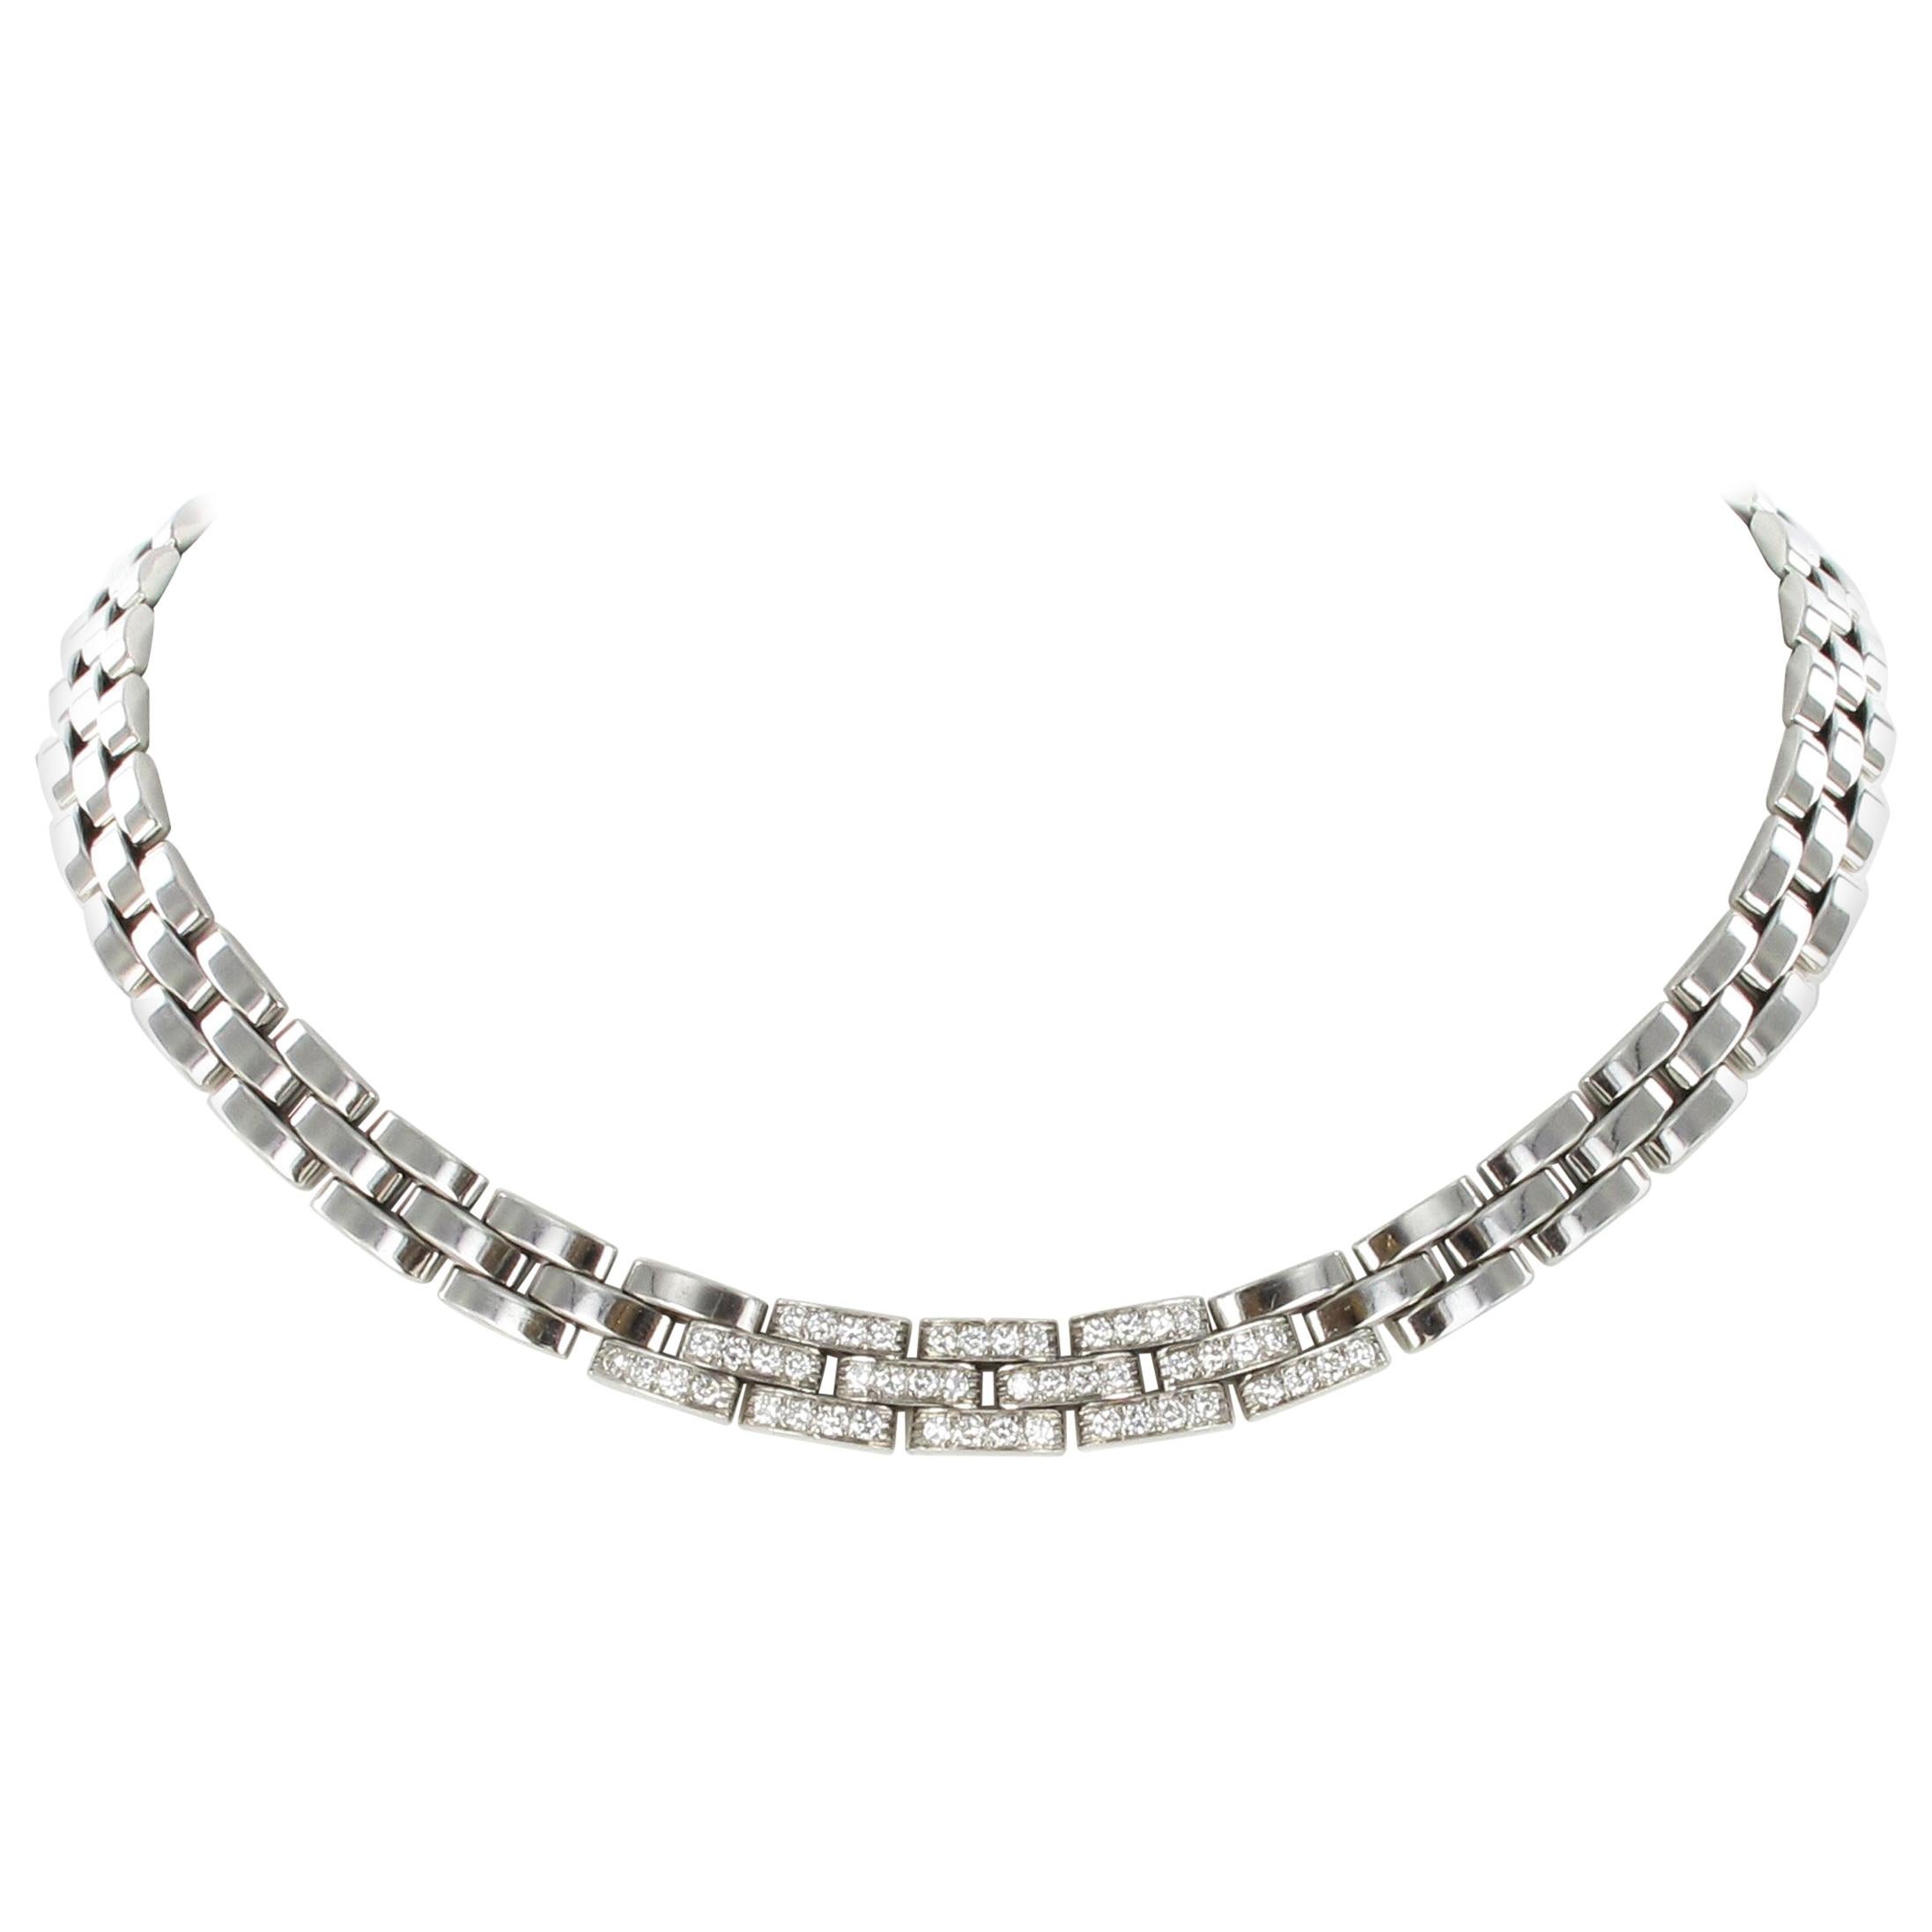 Cartier Maillon Panthère Diamond Necklace in 18 Karat White Gold